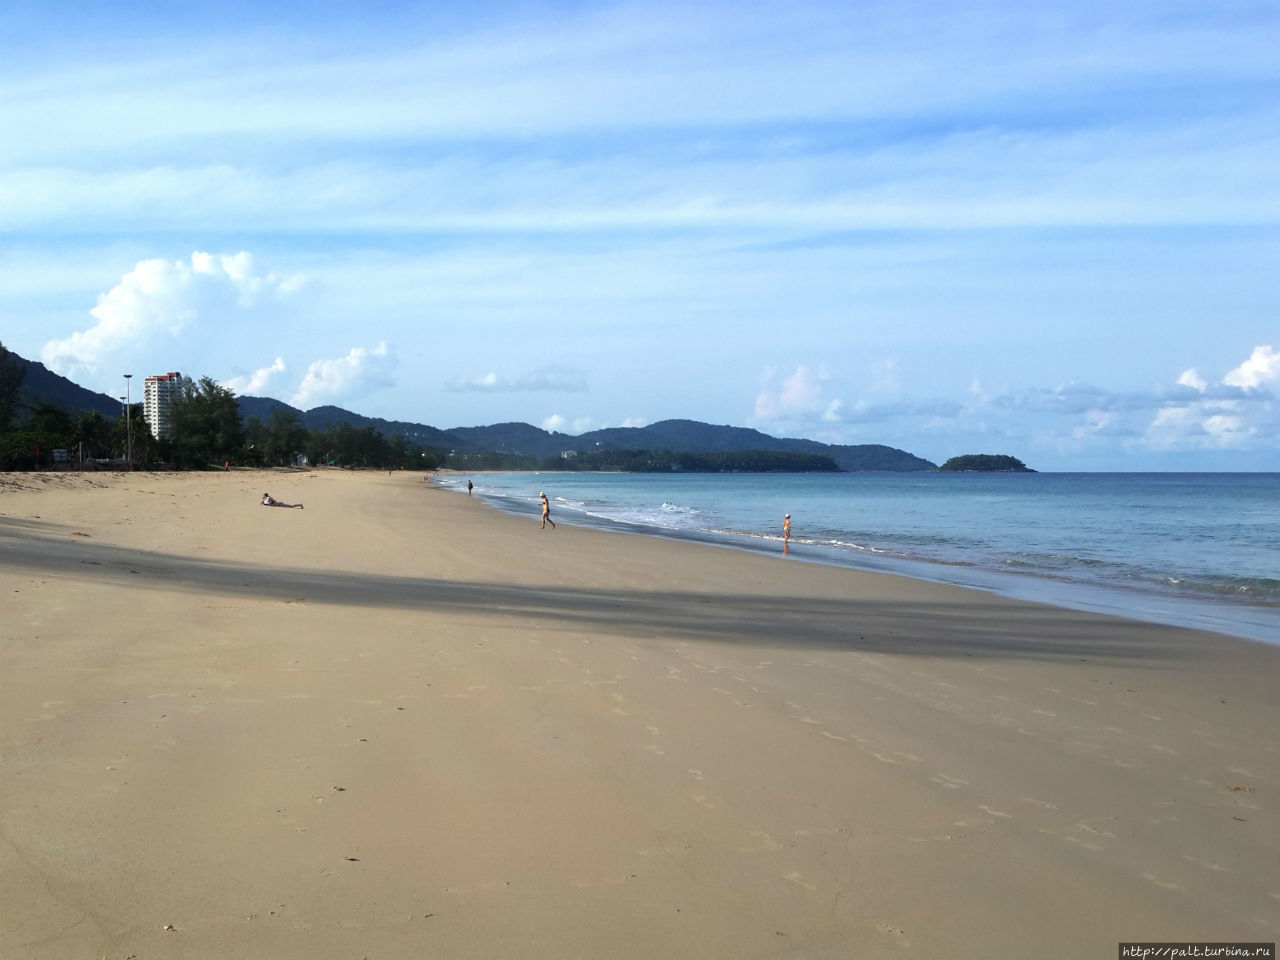 Вид на Карон с отельного пляжа Карон, Таиланд